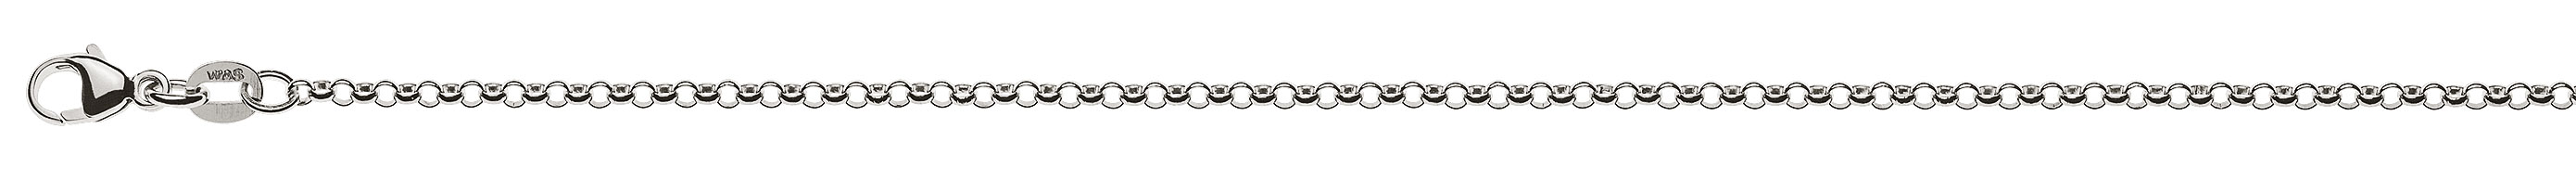 AURONOS Prestige Necklace white gold 18K pea chain 40cm 2.0mm